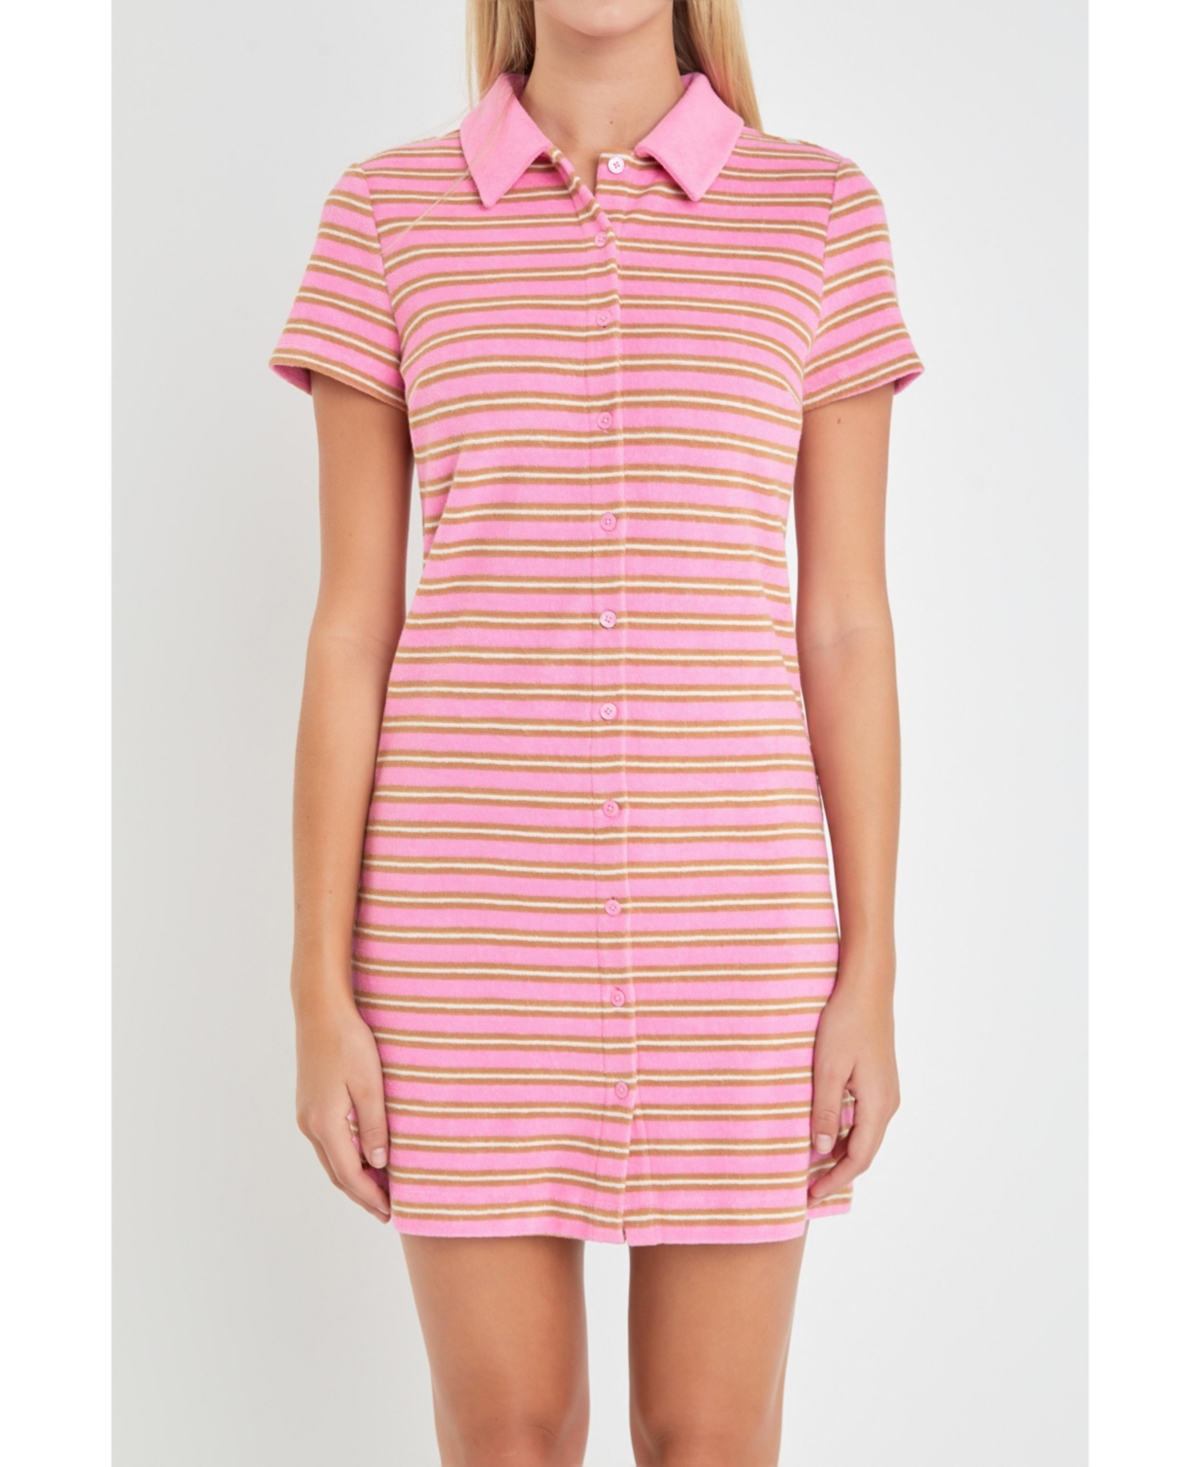 Women's Terry Striped Polo Dress - Pink multi